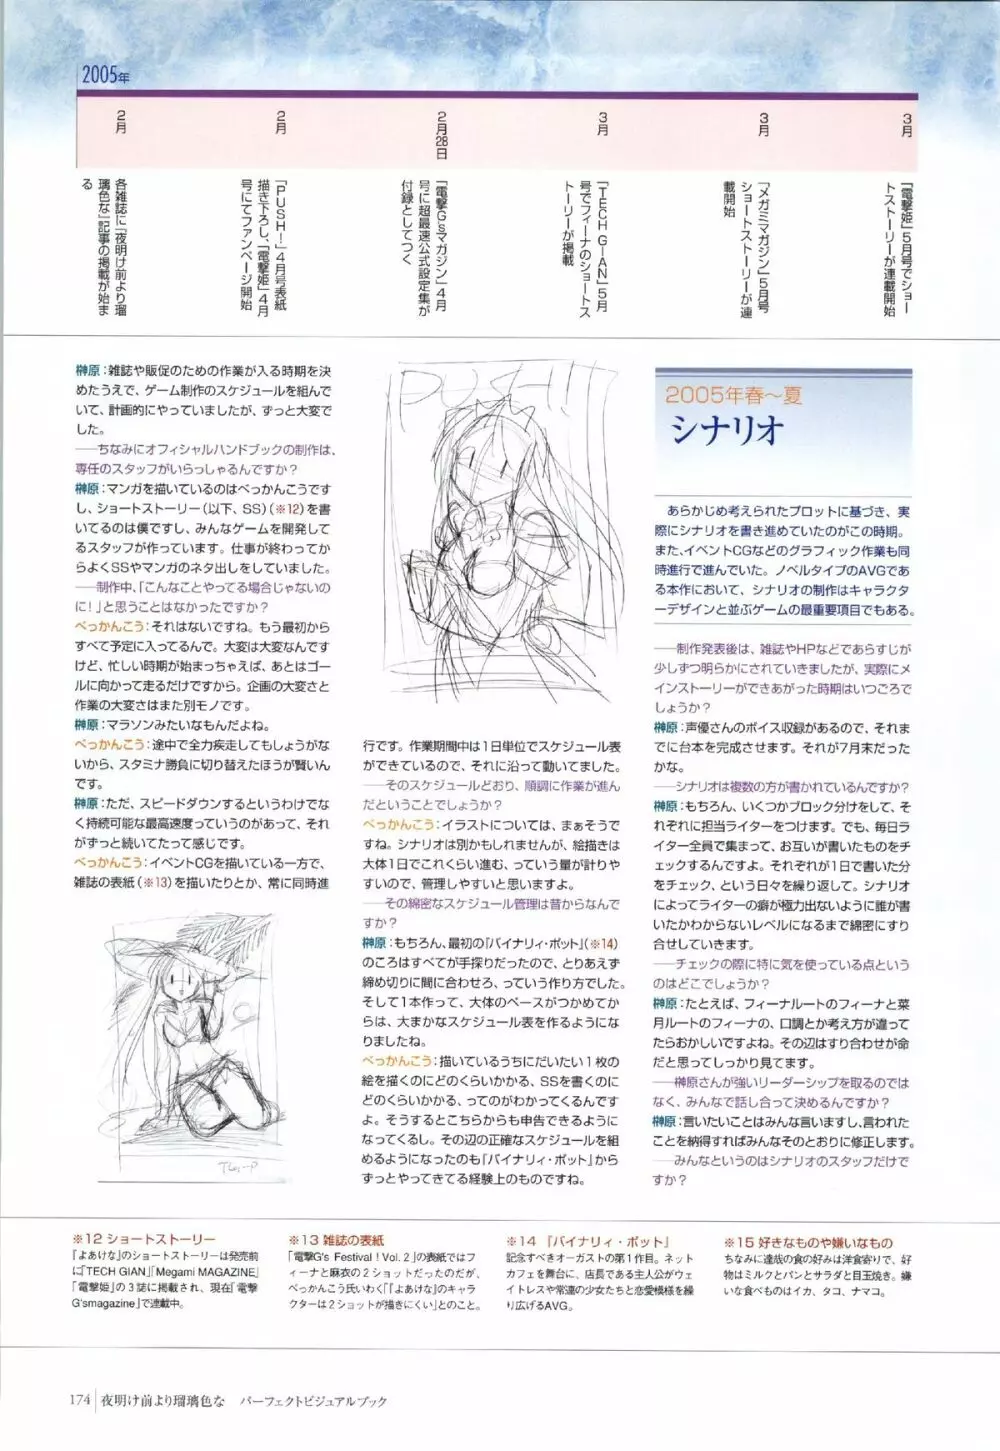 Yoake Mae Yori Ruri Iro Na ( Crescent Love ) Perfect Visual Book 171ページ